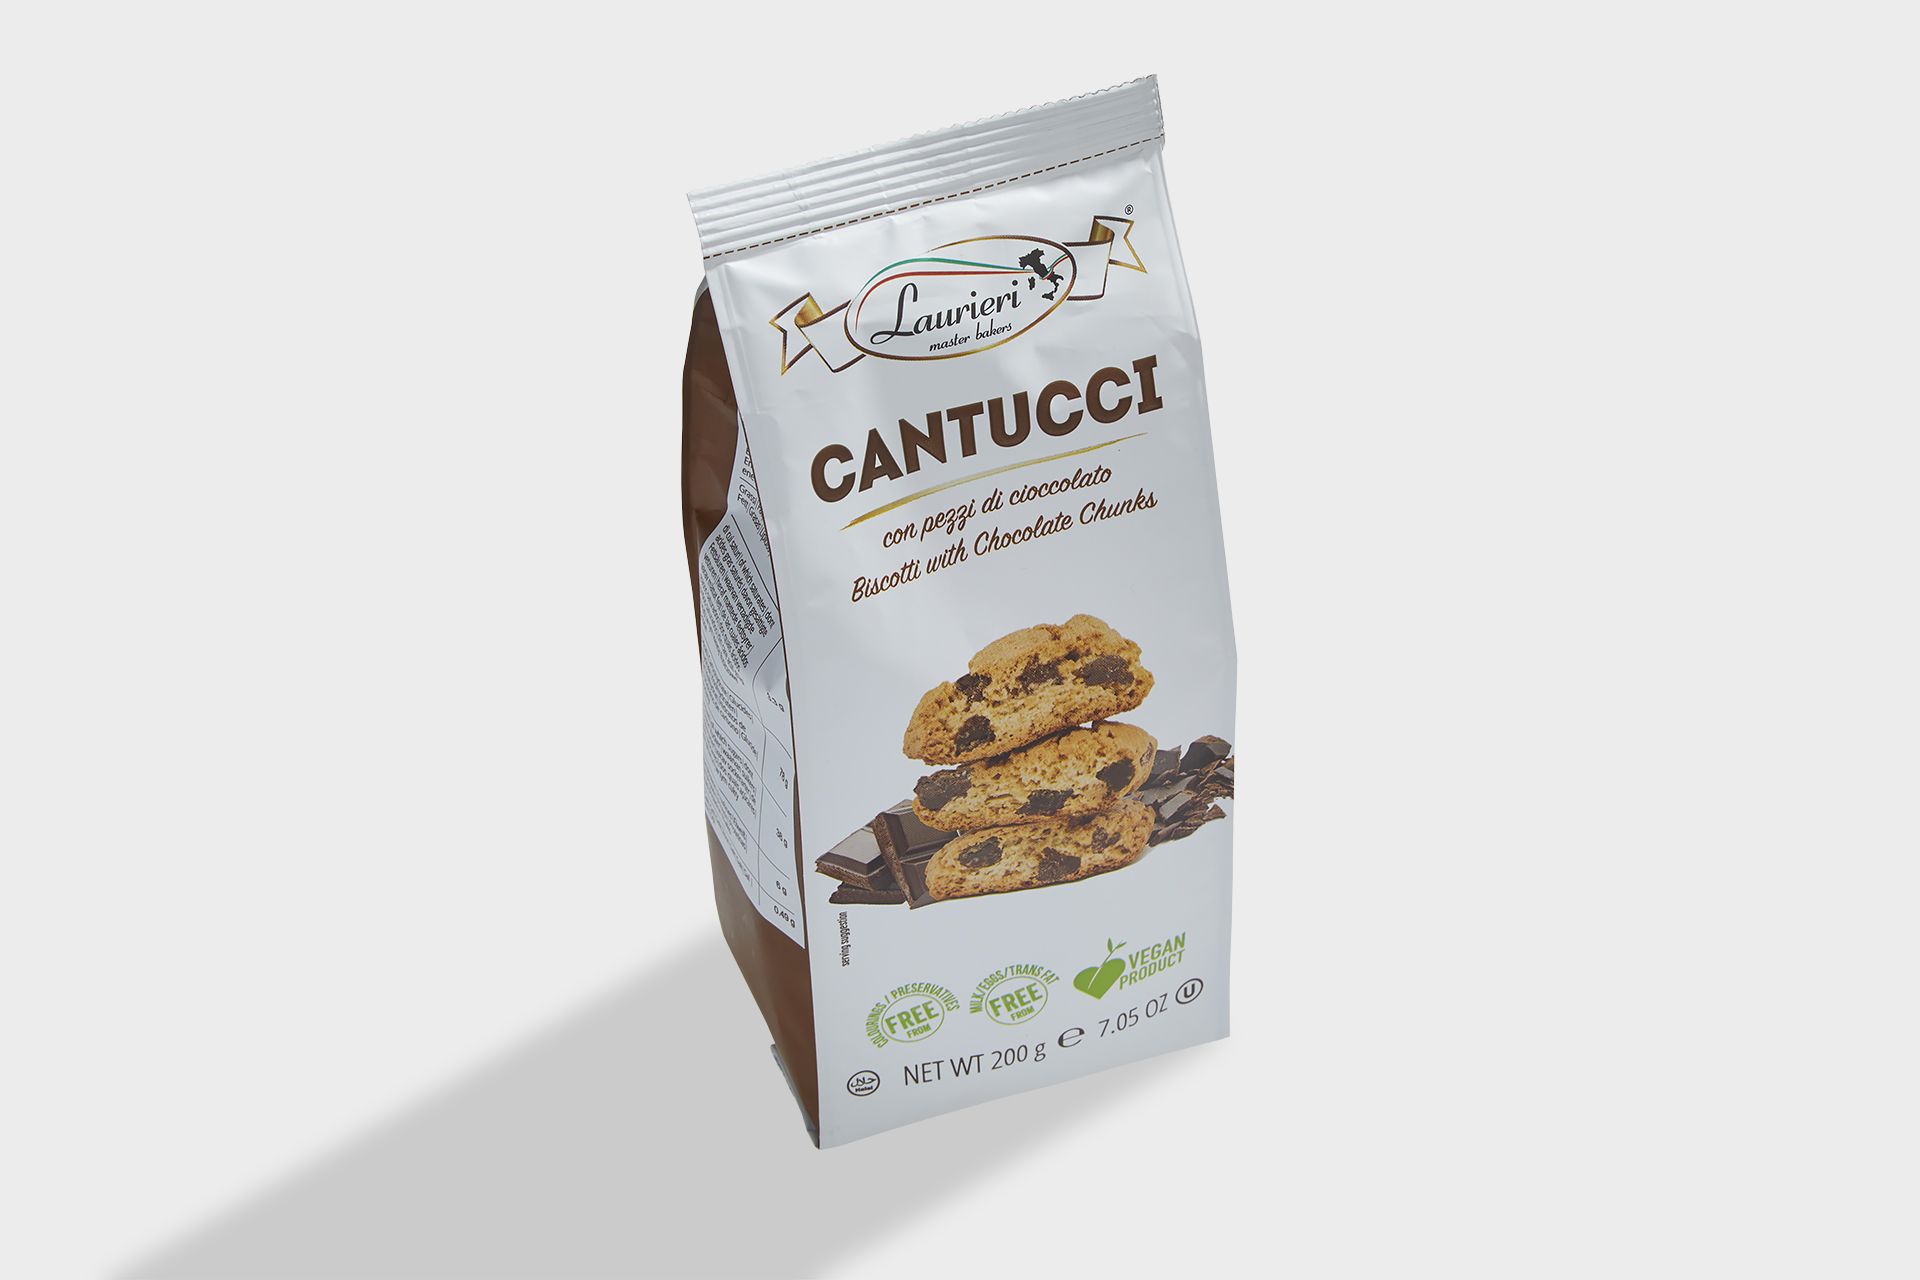 Cantucci chocolate Cantuccini Lowin